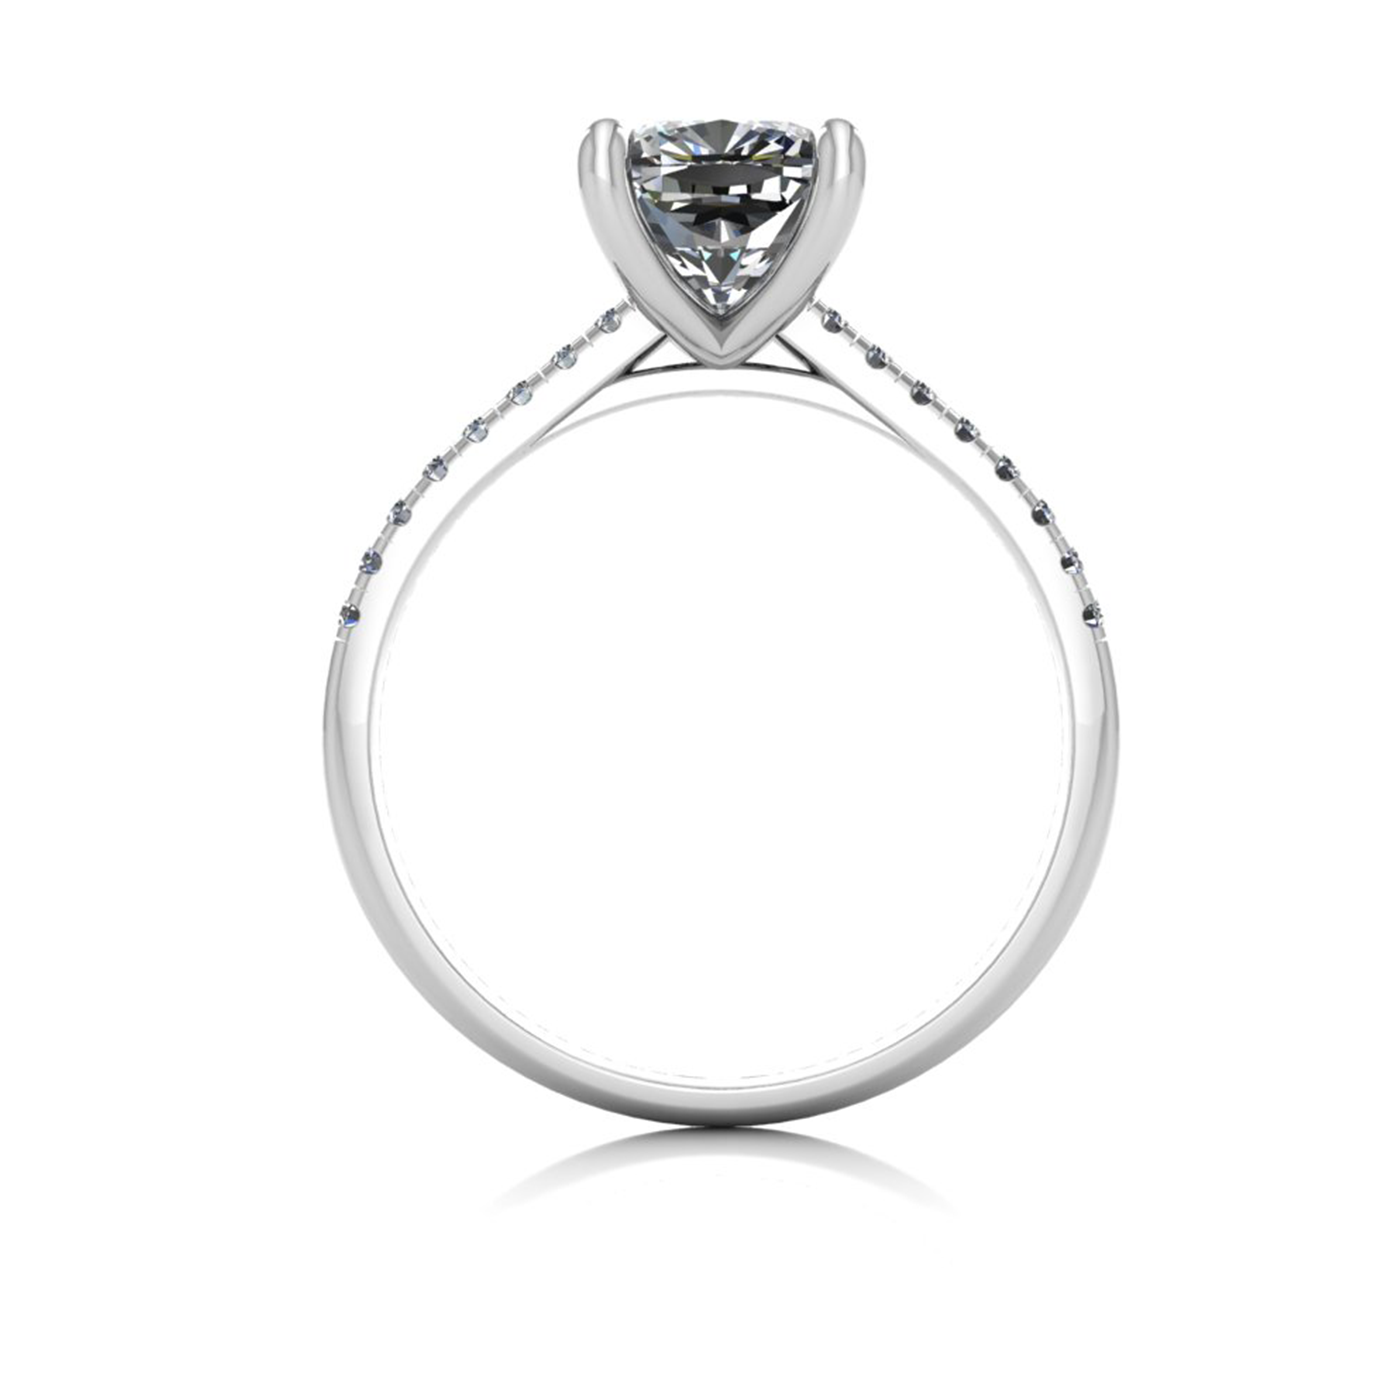 18k white gold 2.0ct 4 prongs cushion cut diamond engagement ring with whisper thin pavÉ set band